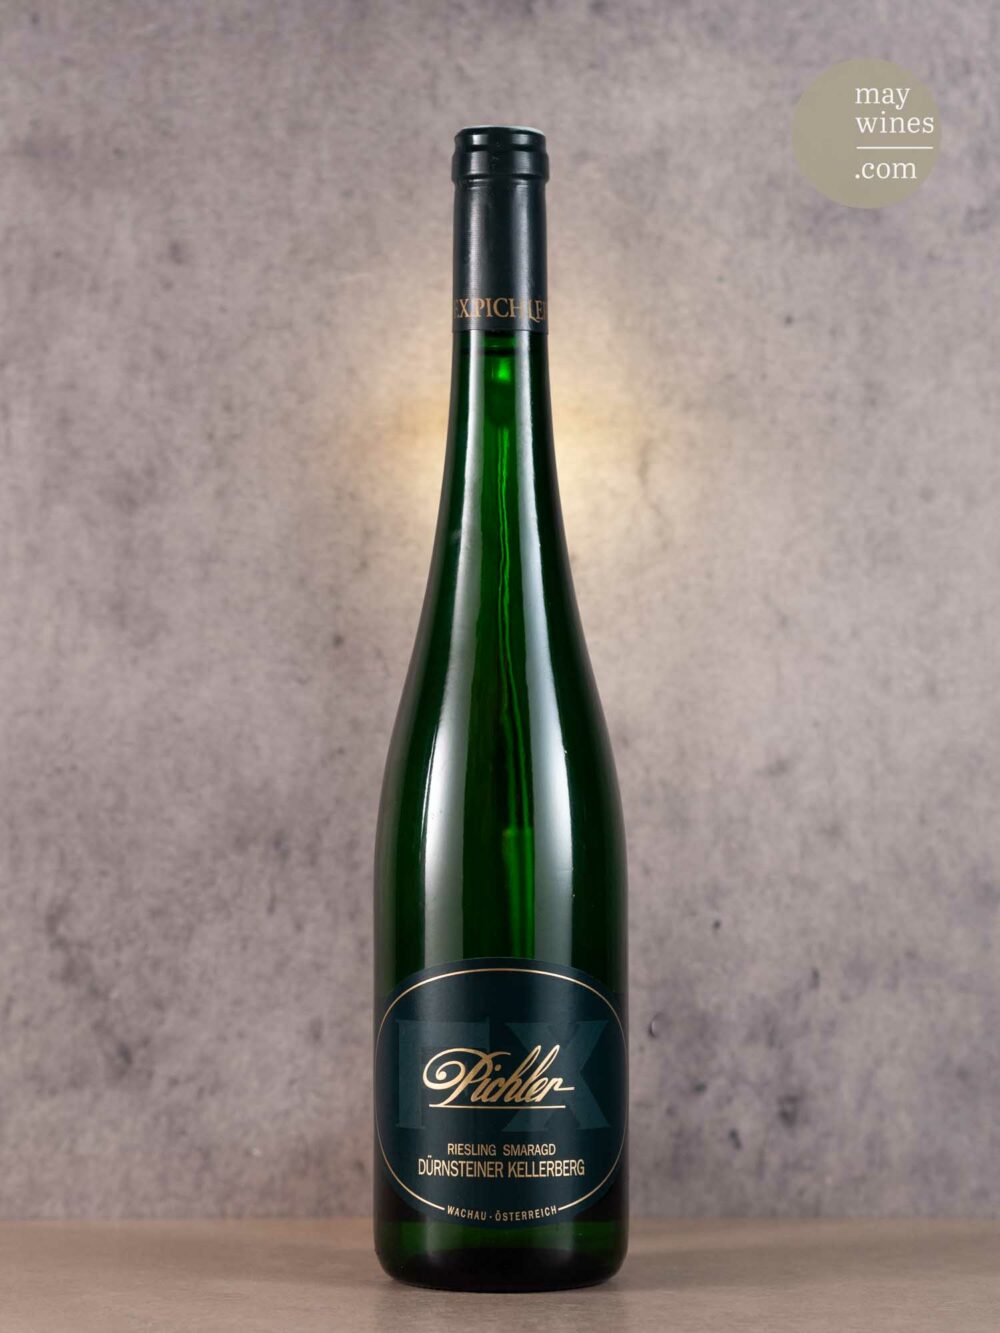 May Wines – Weißwein – 2003 Kellerberg Riesling Smaragd - Weingut FX Pichler